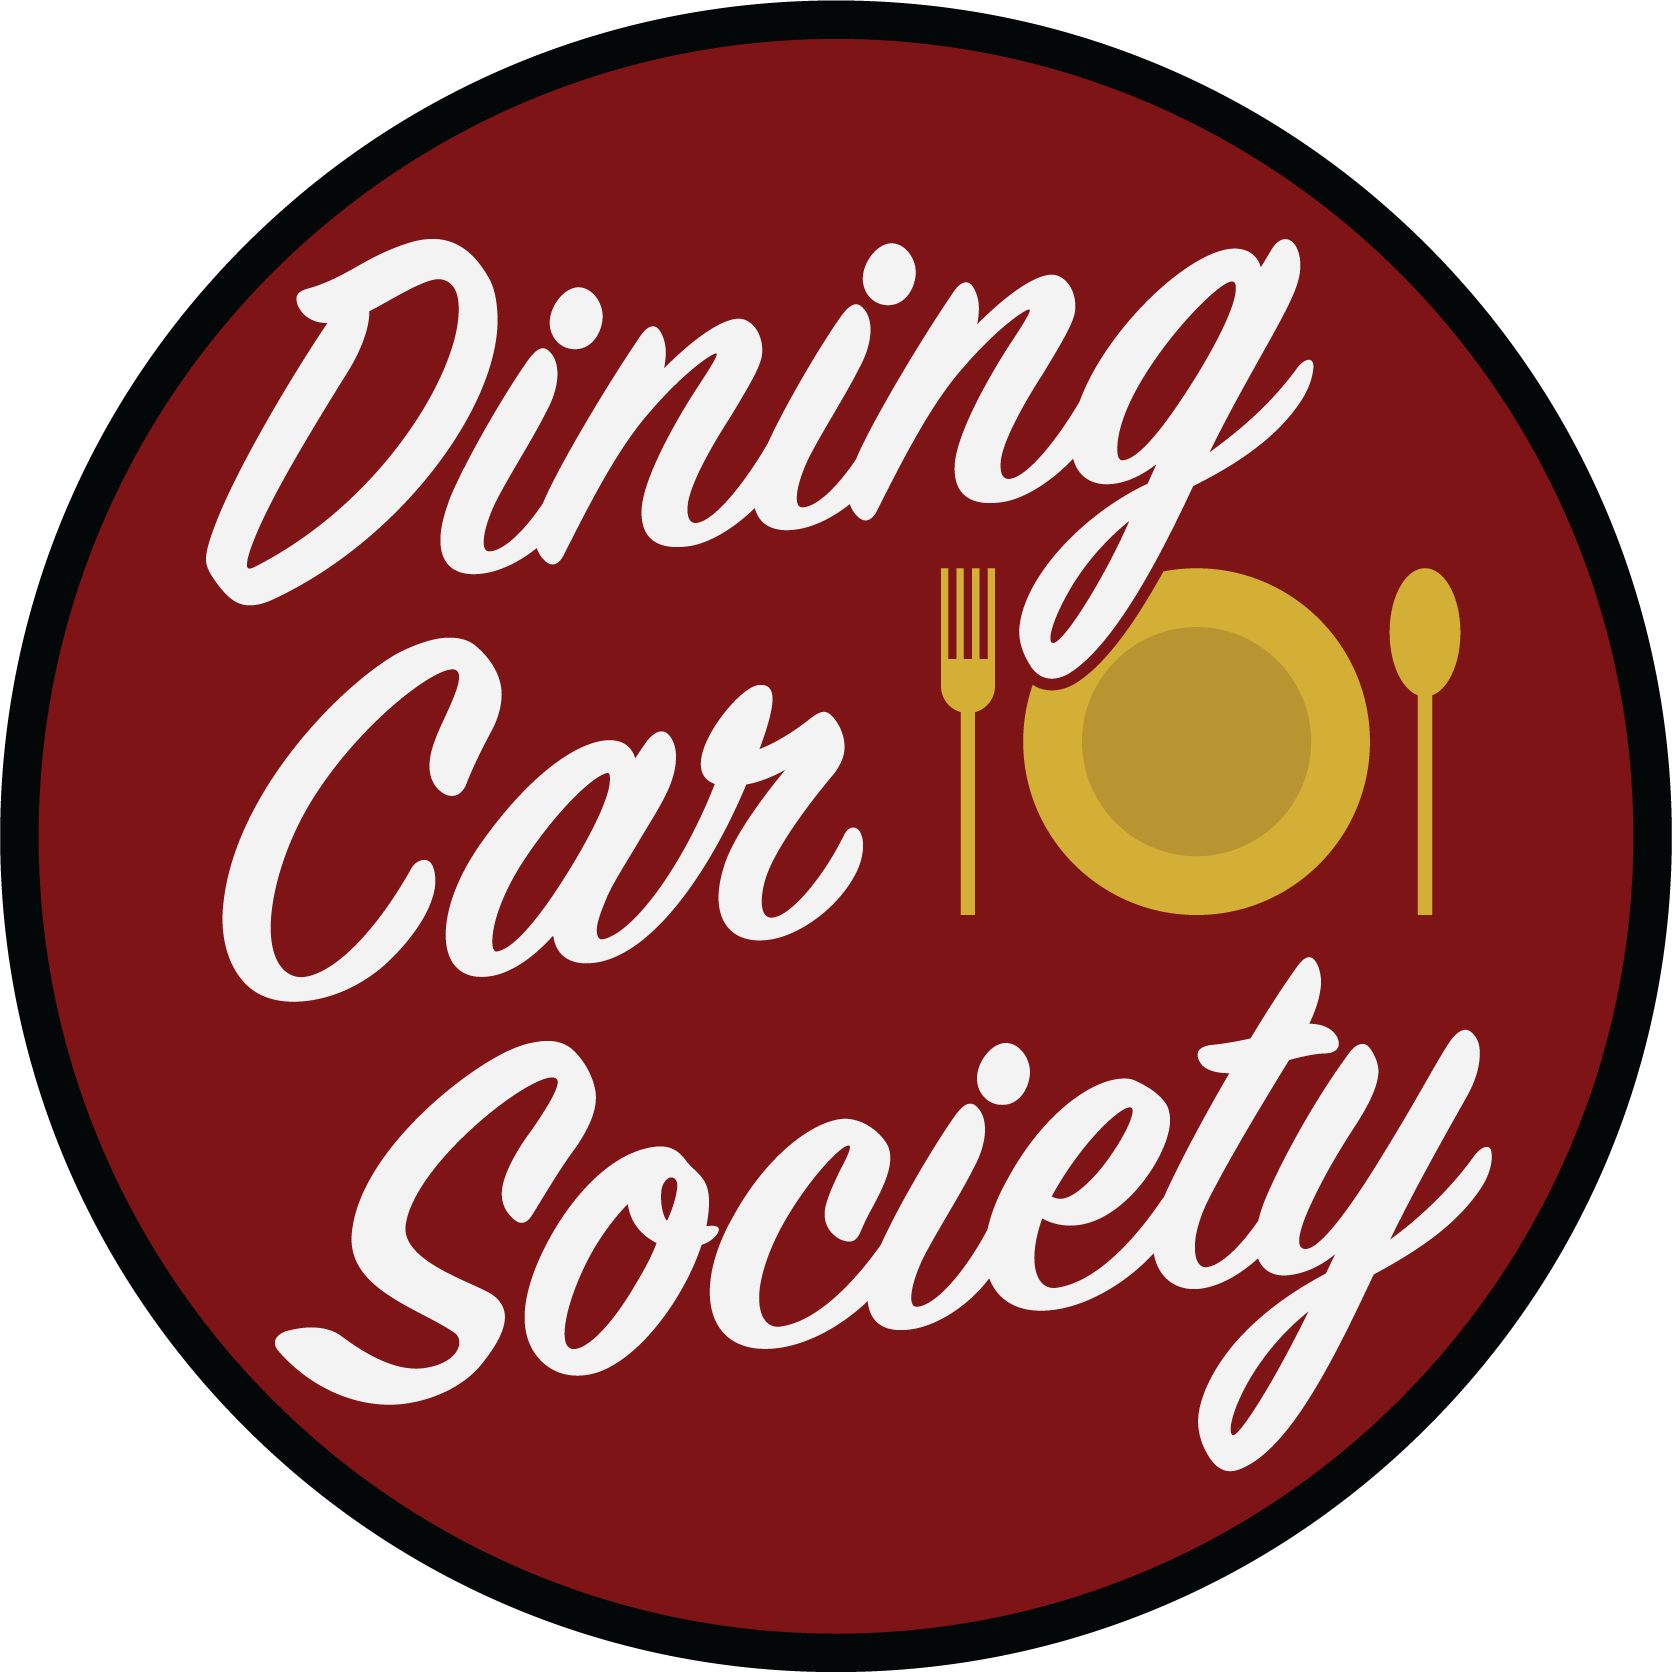 Dining Car Society